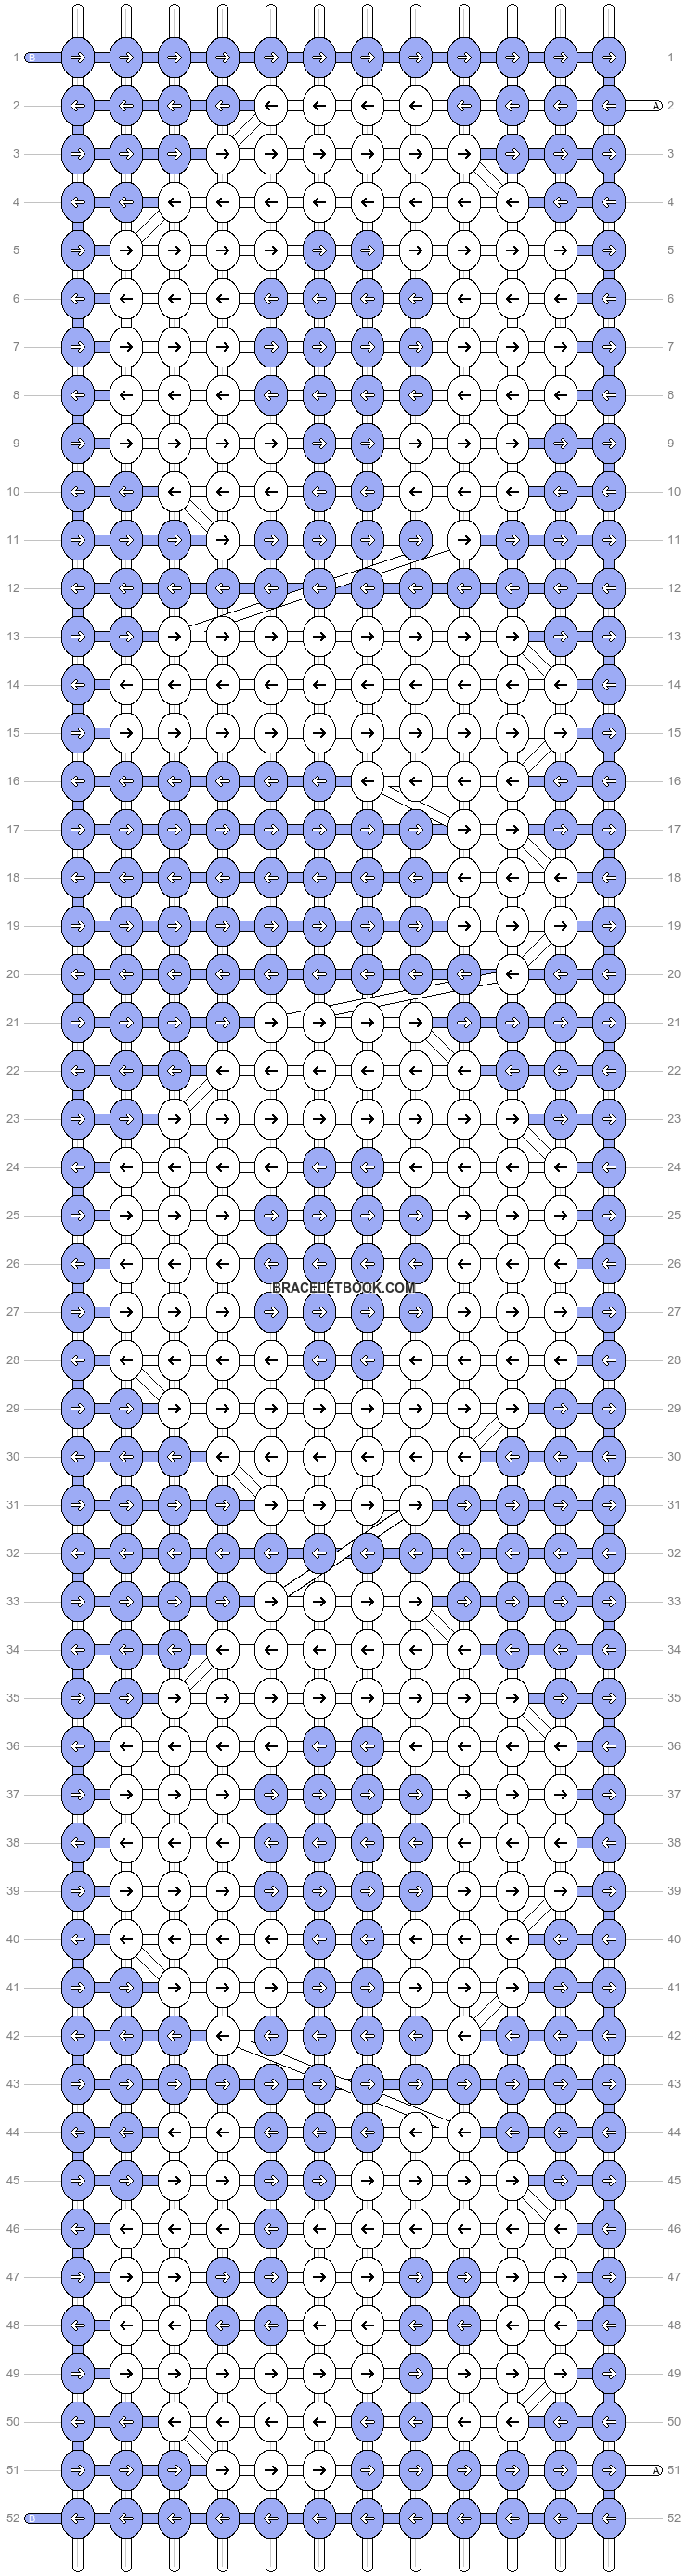 Alpha pattern #64184 variation #118267 pattern